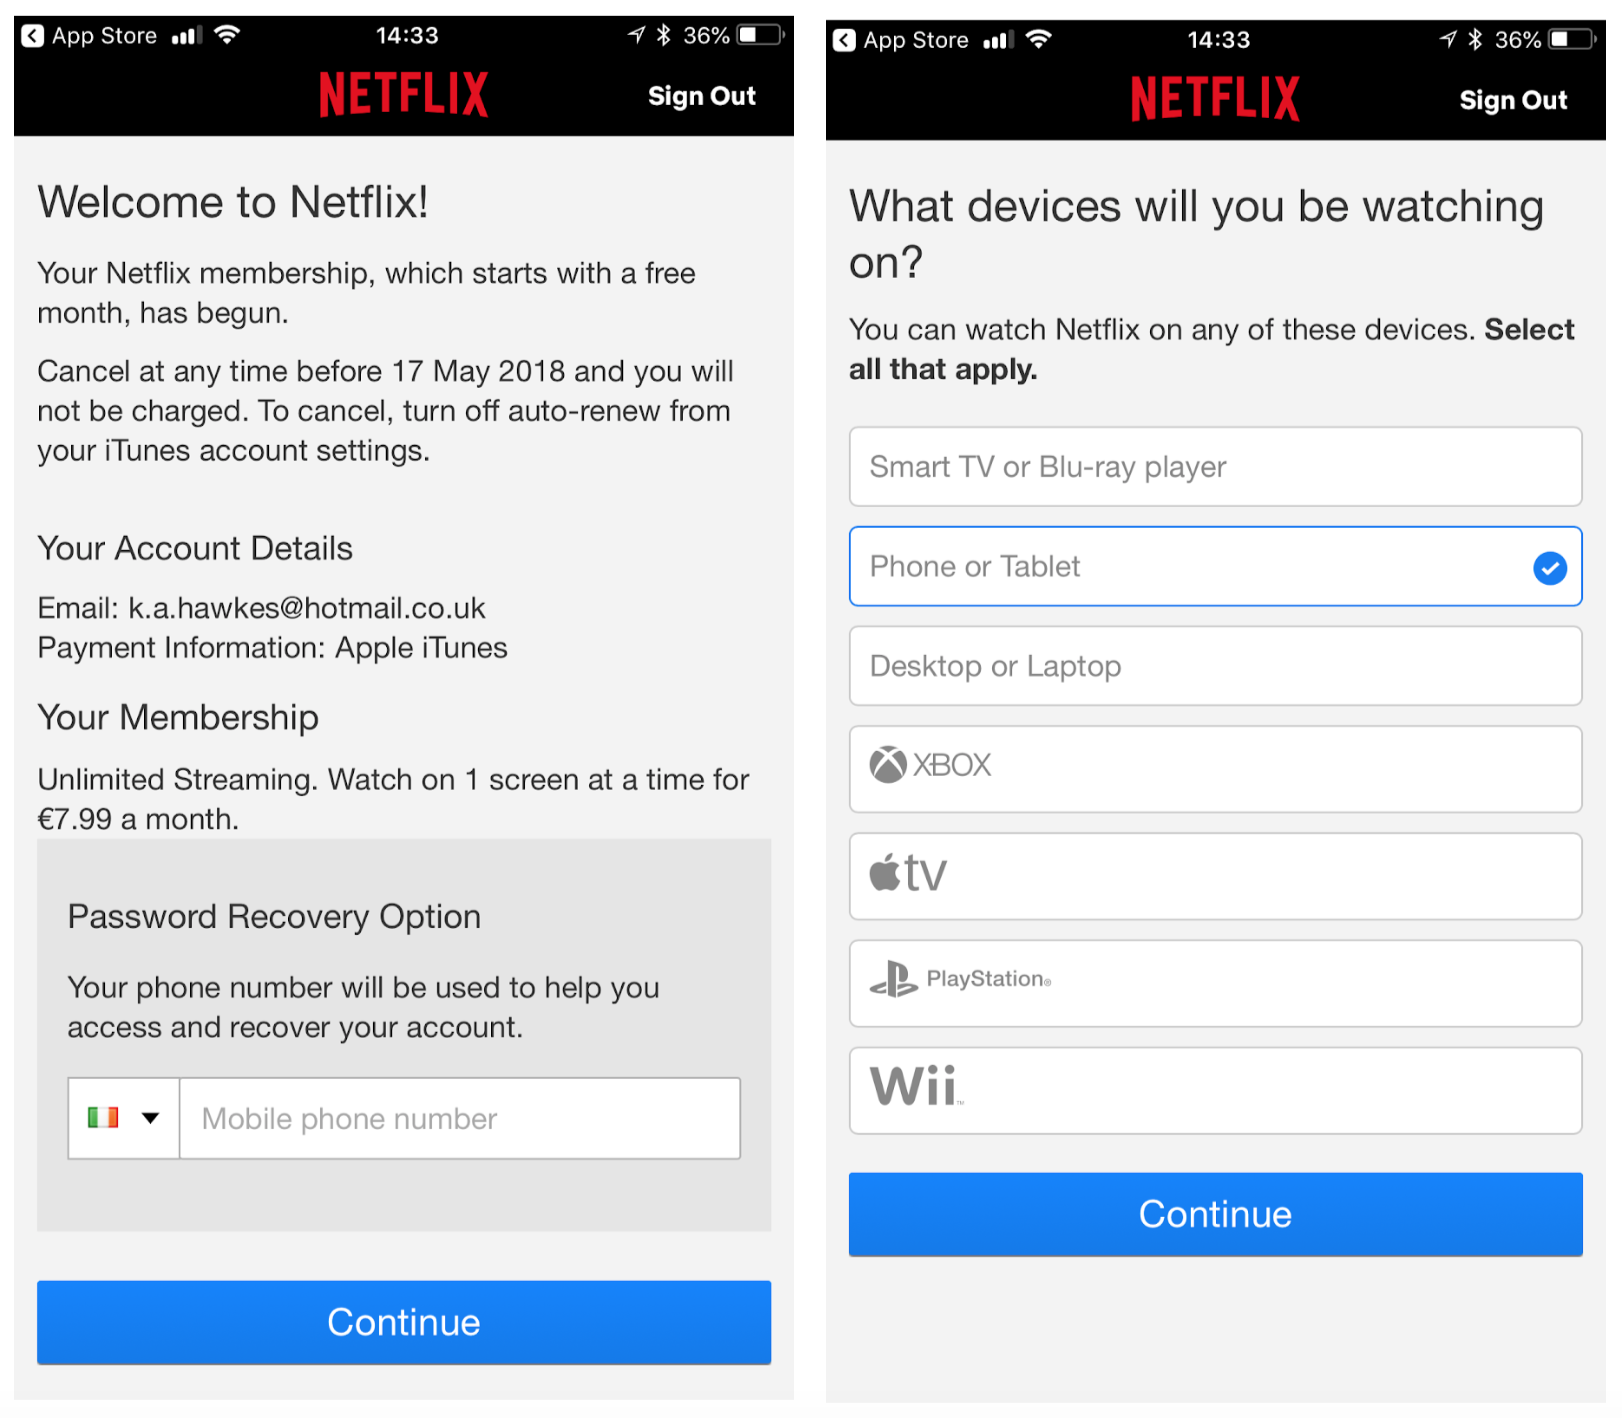 Netflix app sign up screens